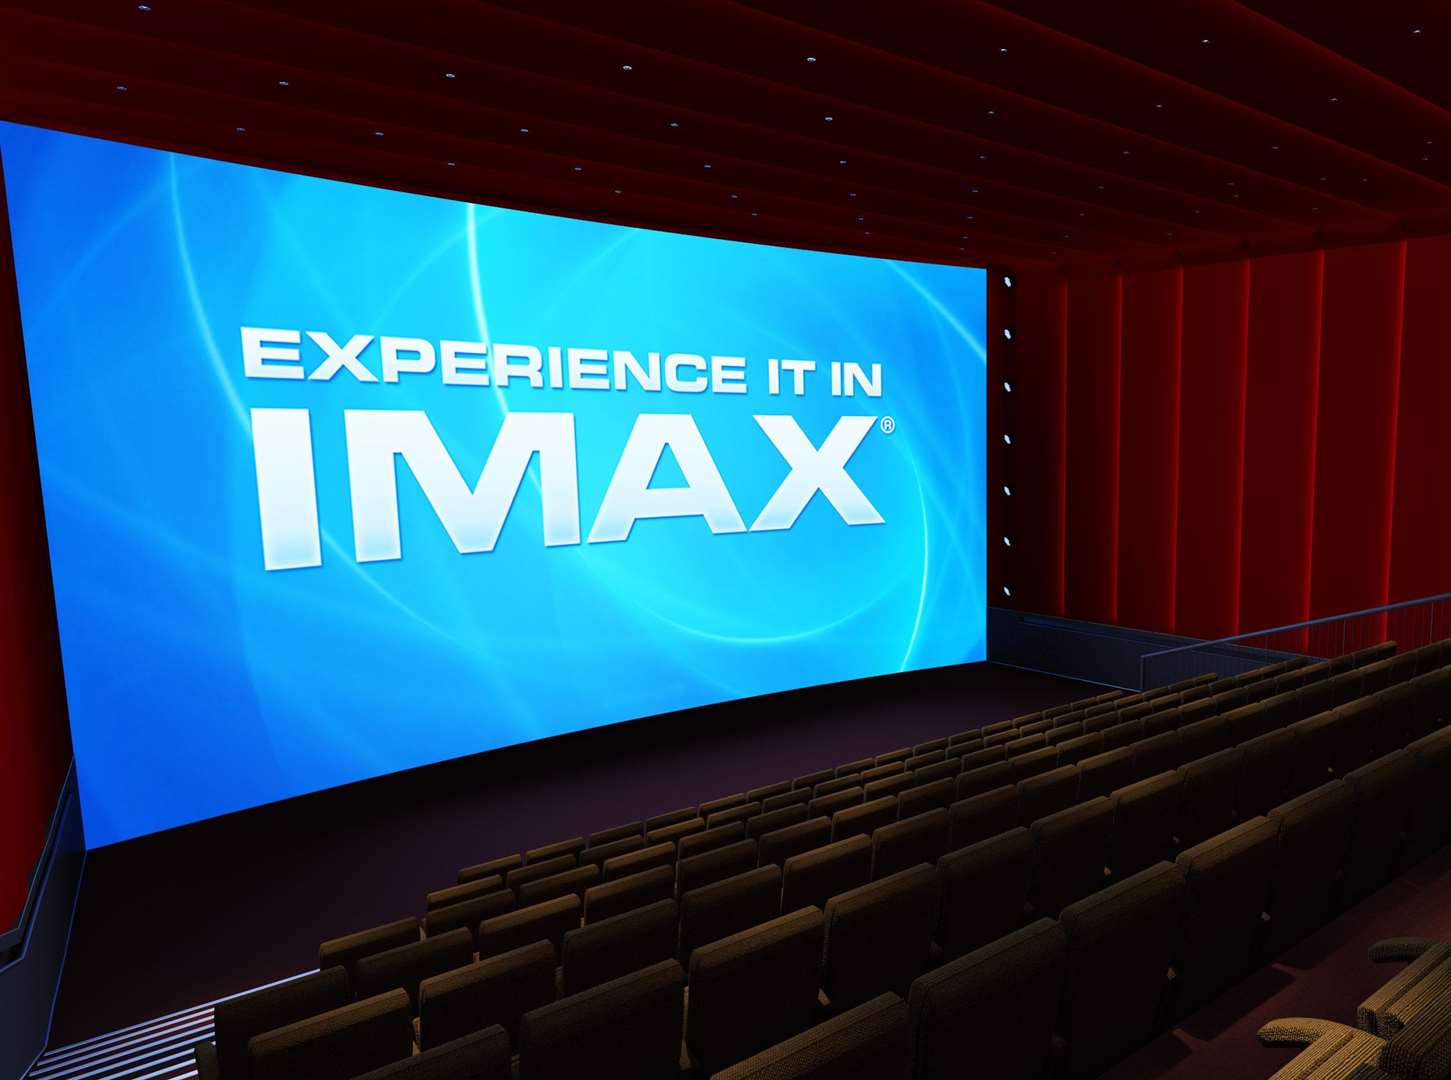 An IMAX cinema